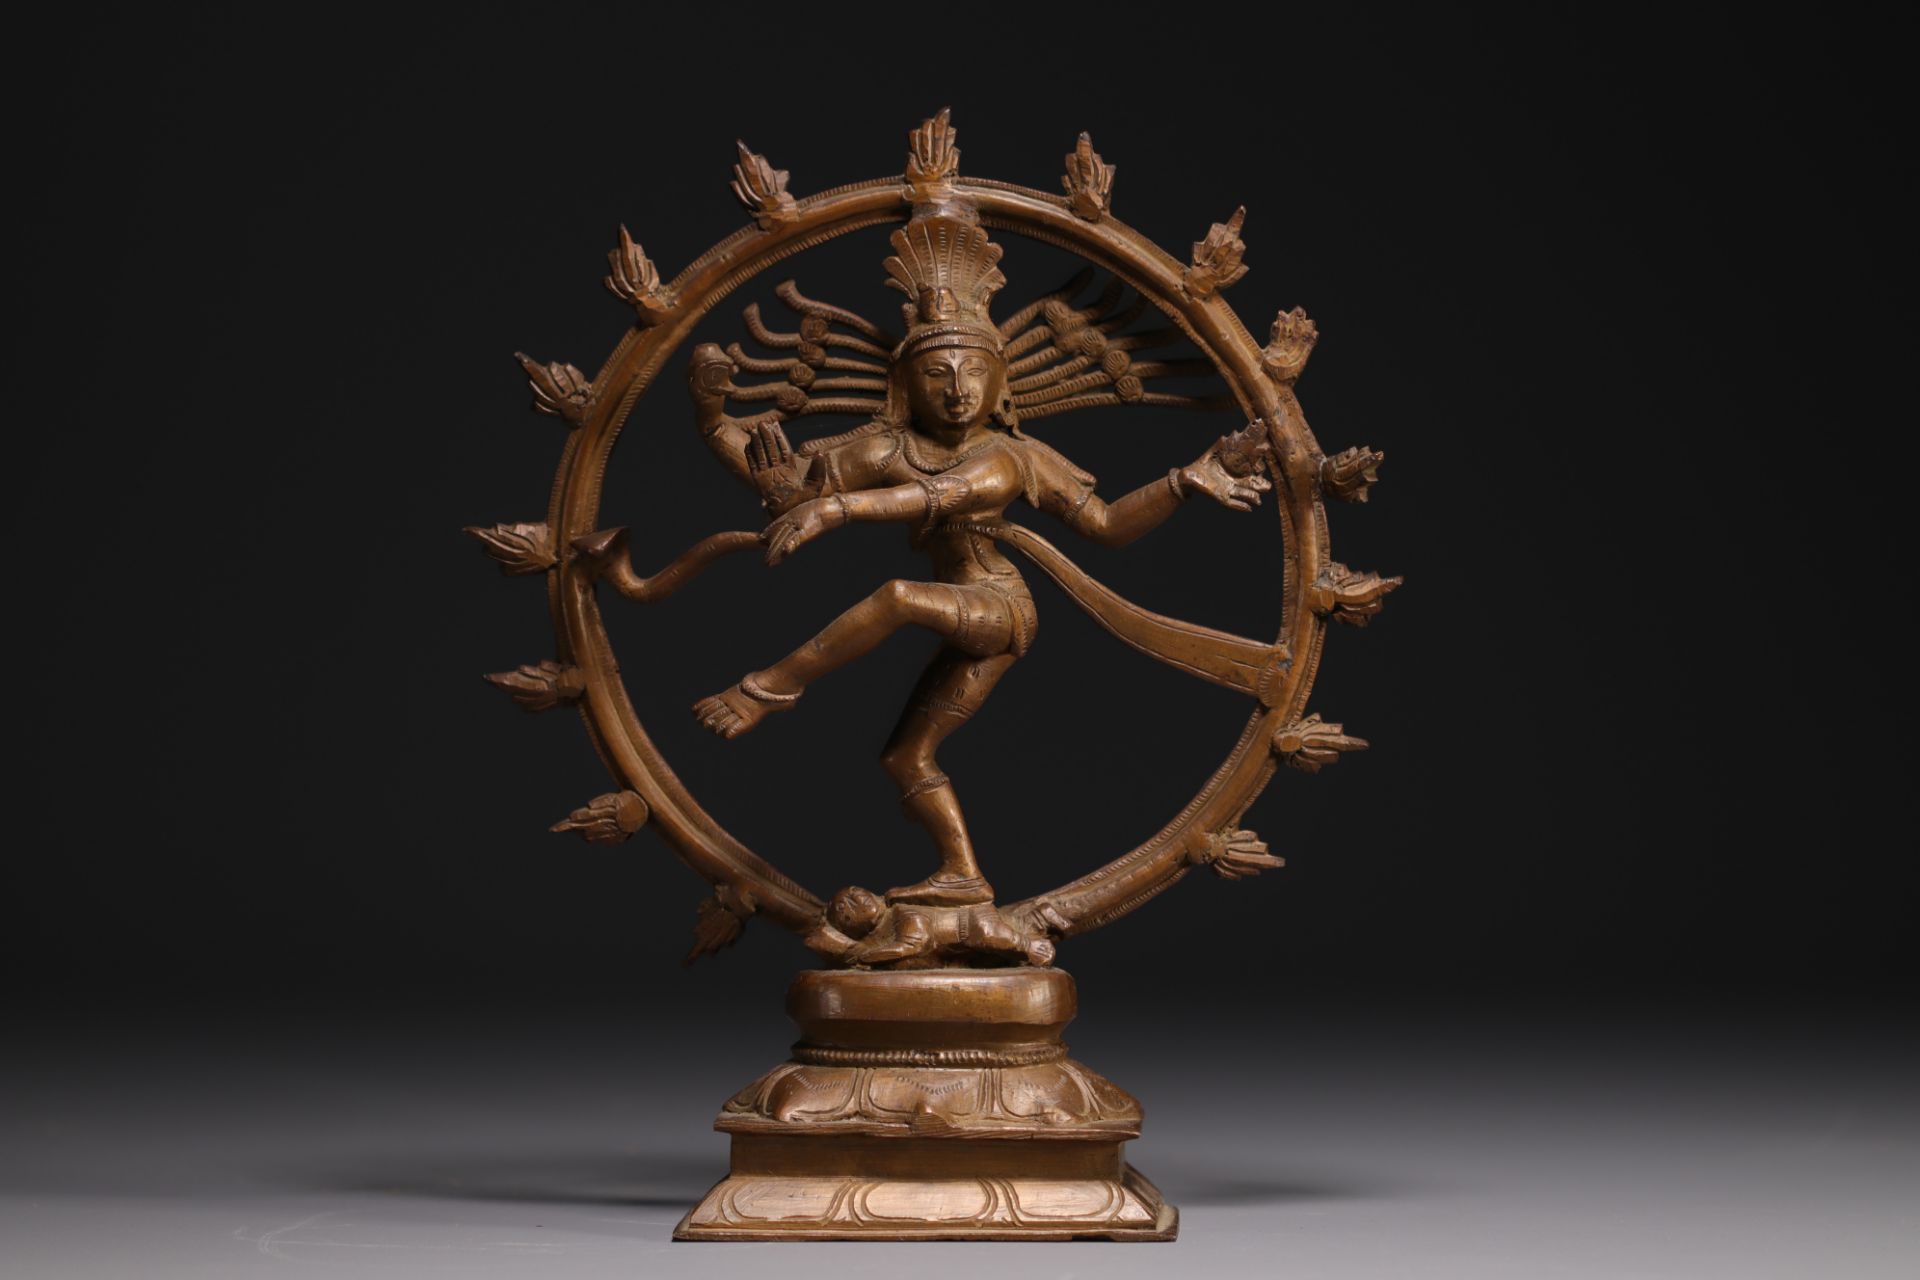 South India - Shiva Nataraja "The king of dancers" Bronze statue.